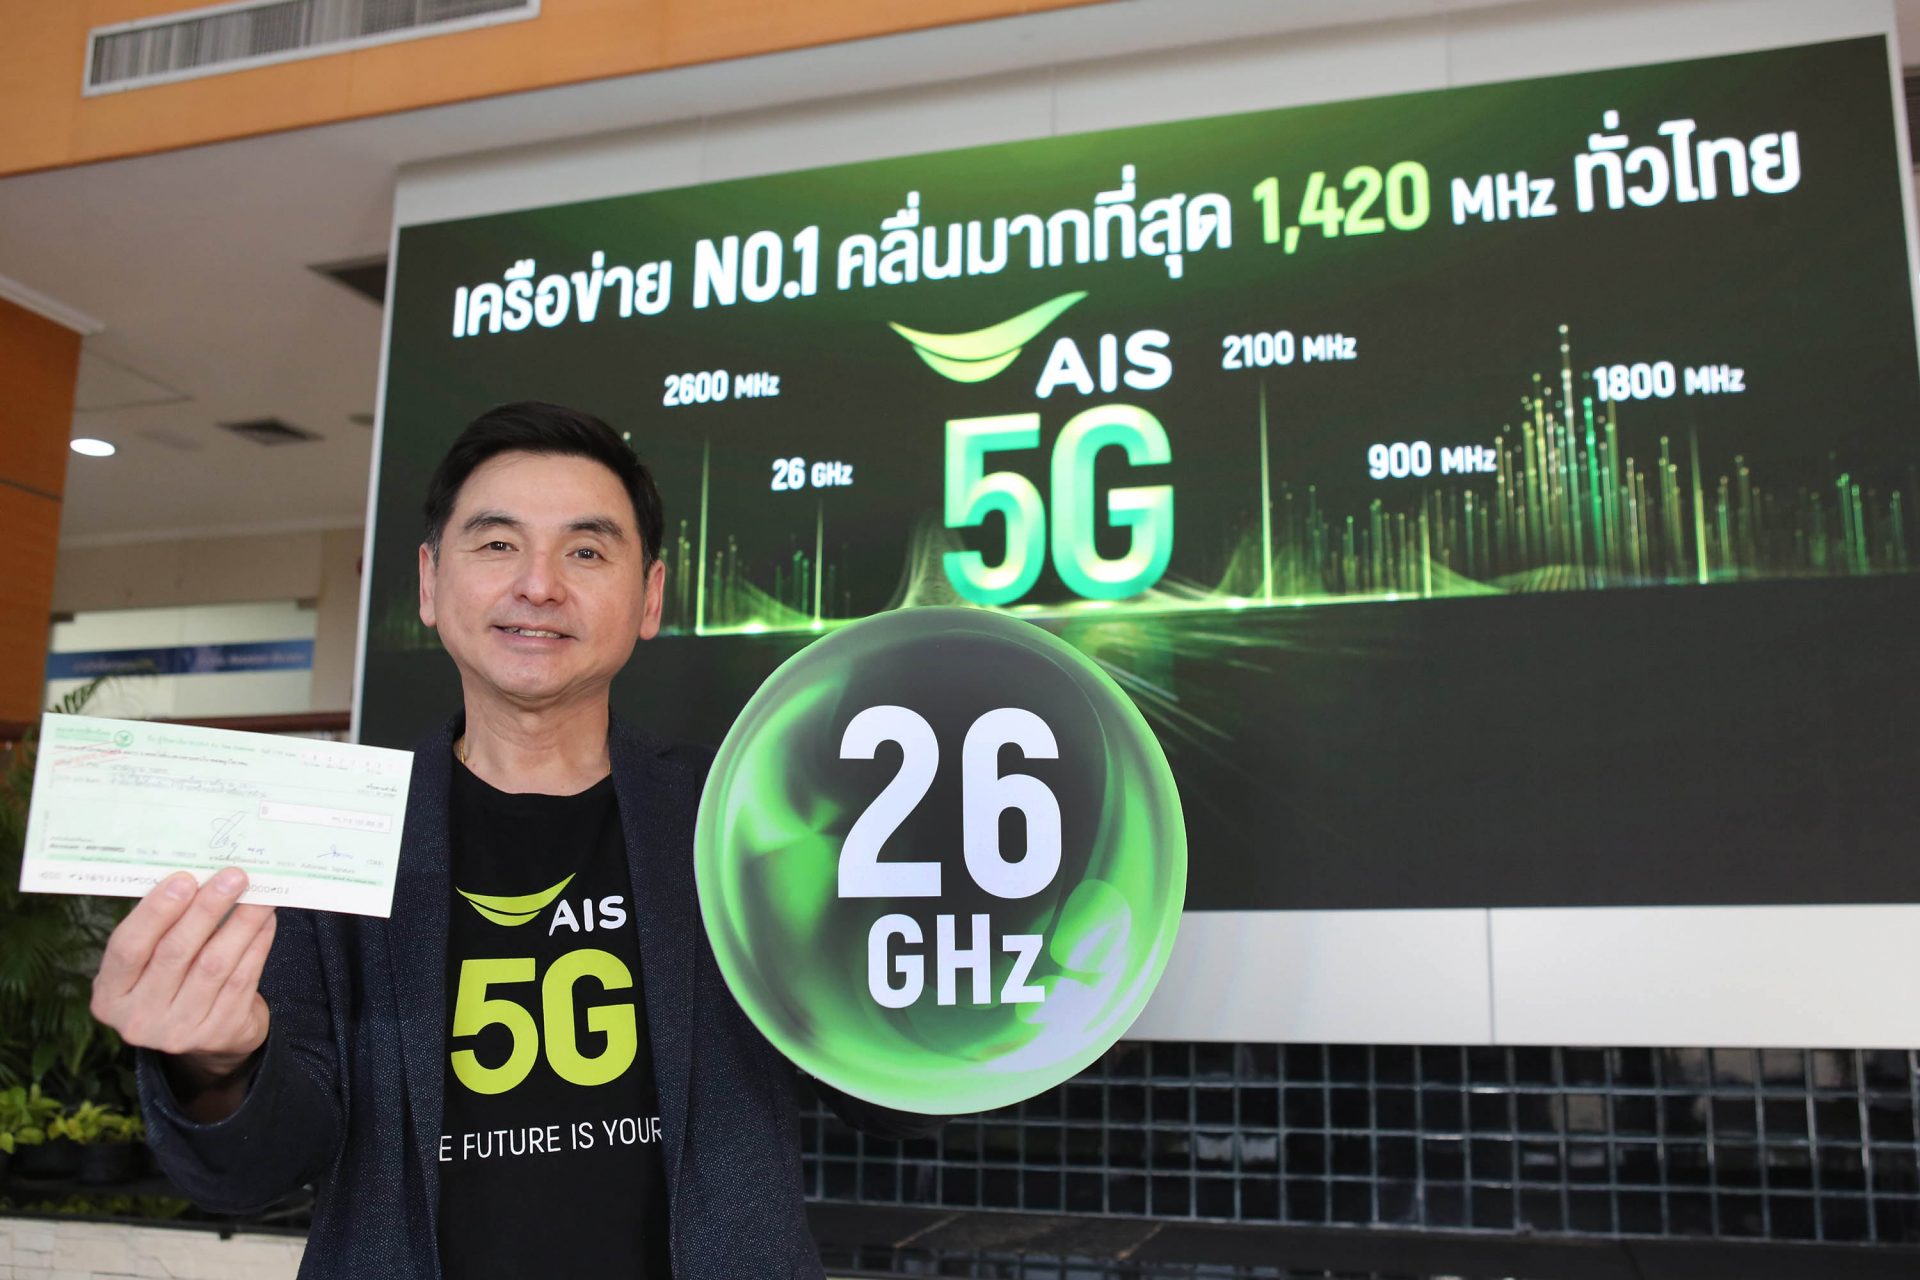 AIS กำเงิน 5 พันล้าน ชำระค่าคลื่น 26 GHz พร้อมเดินหน้าลุย 5G ภาคอุตสาหกรรม กู้เศรษฐกิจไทย